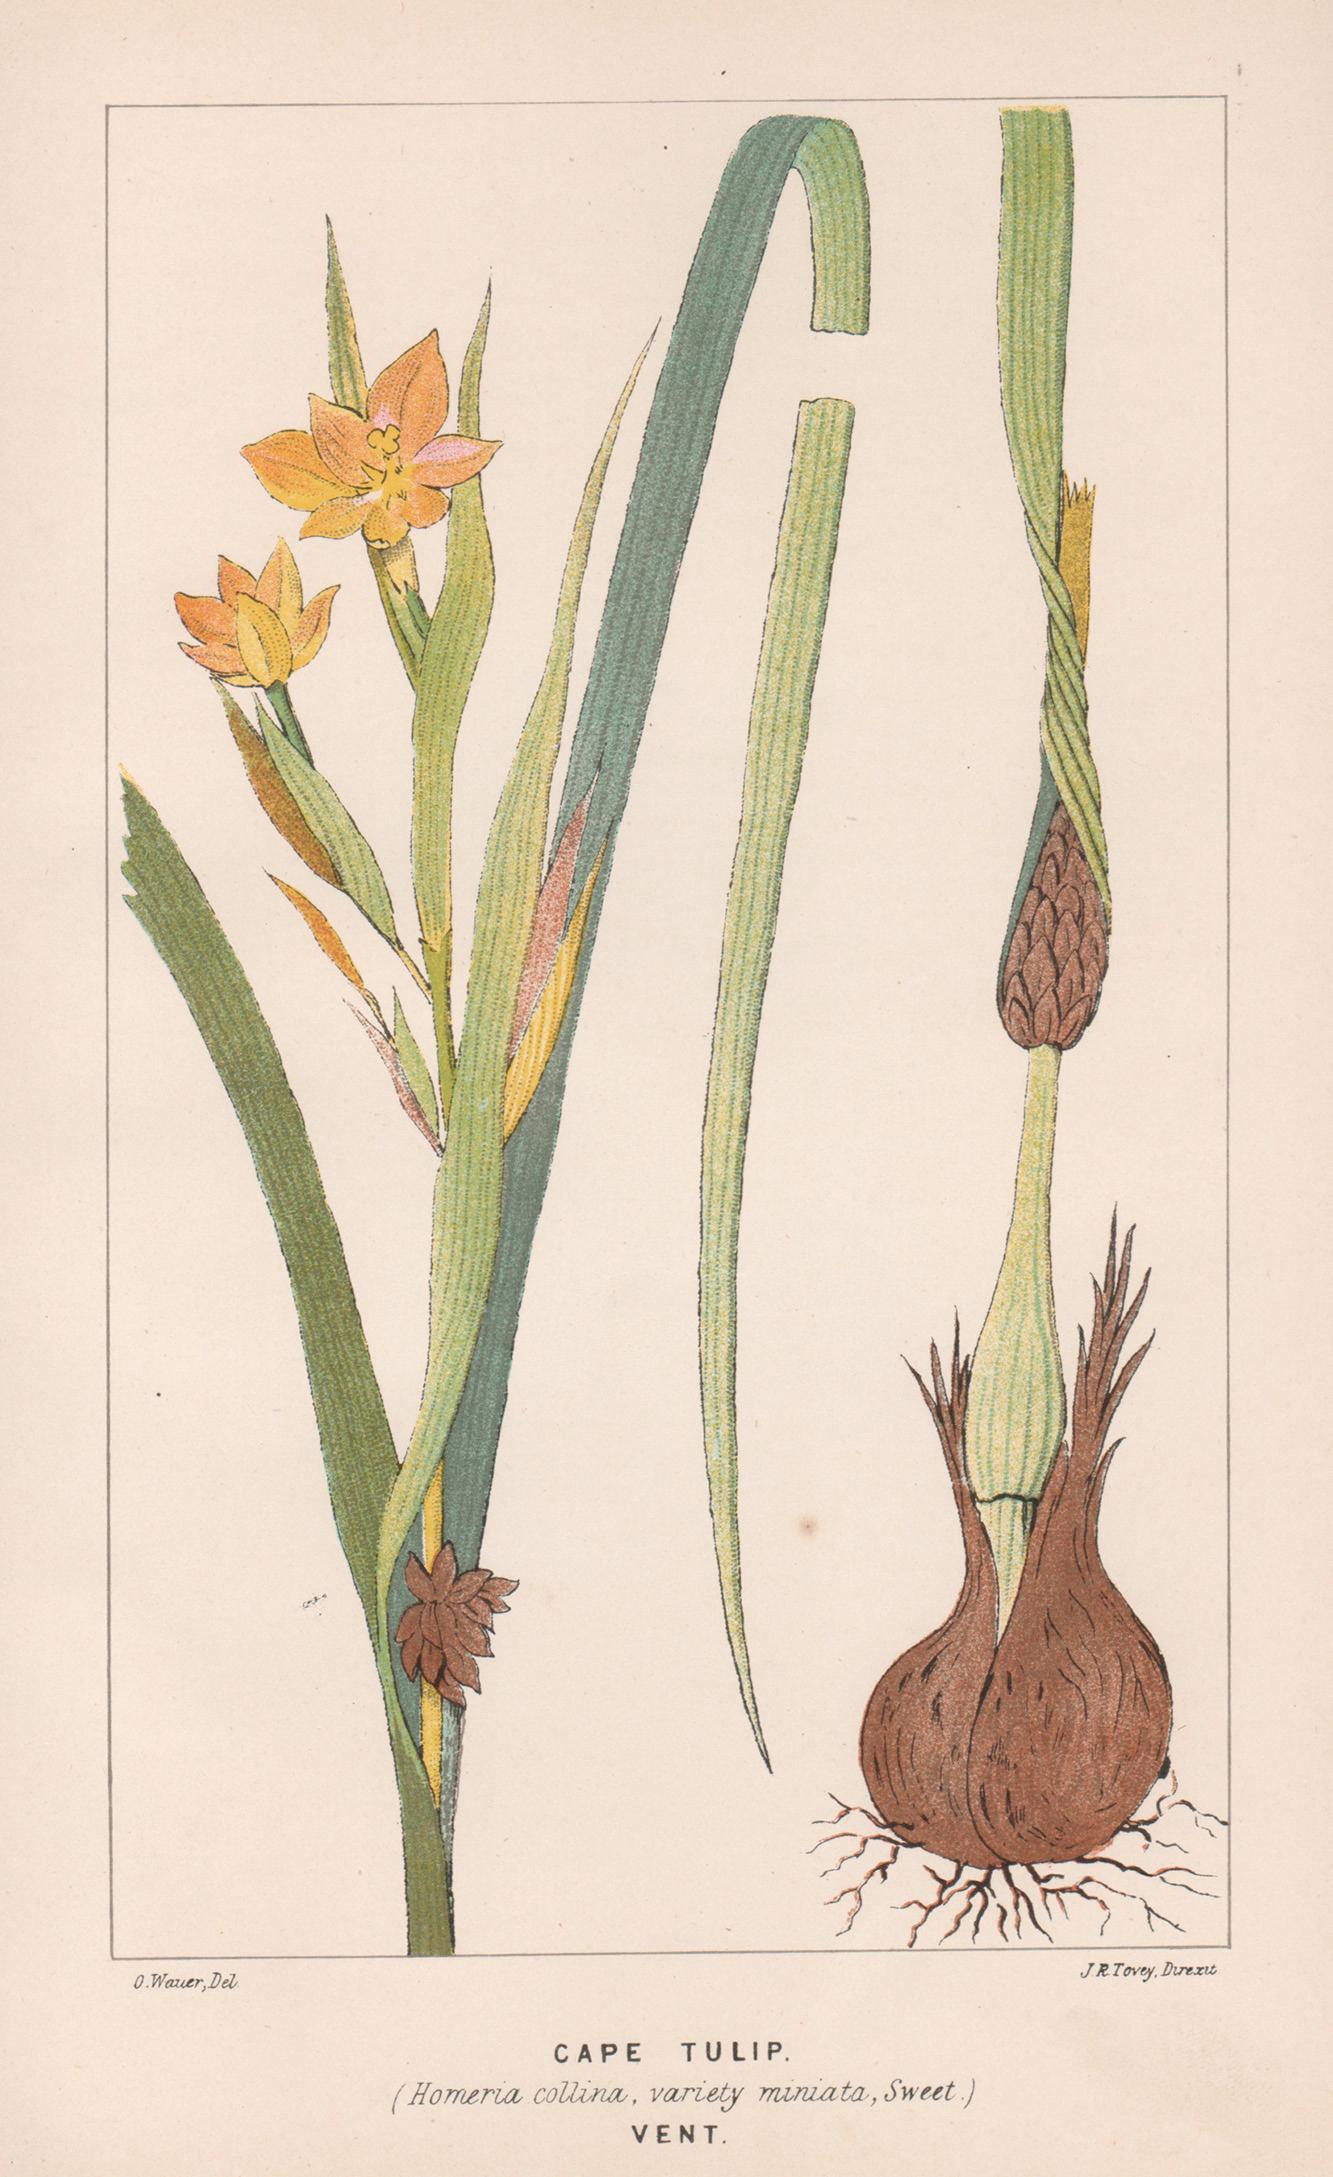 O Wauer Still-Life Print - Cape Tulip (Homeria collina), antique botanical lithograph